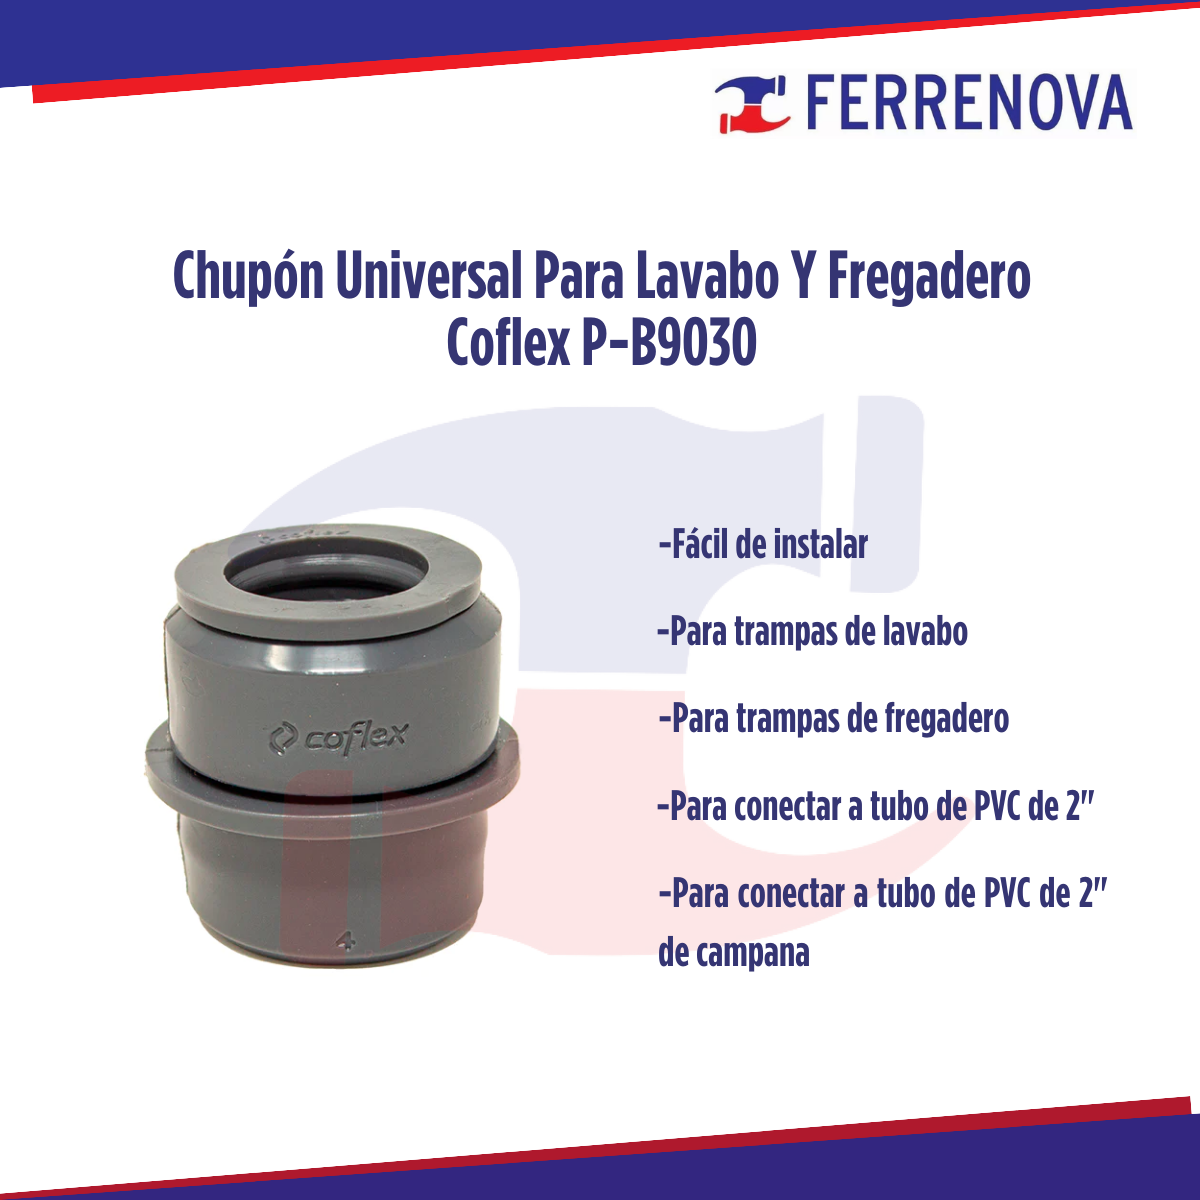 Chupón Universal Para Lavabo Y Fregadero Coflex P-B9030